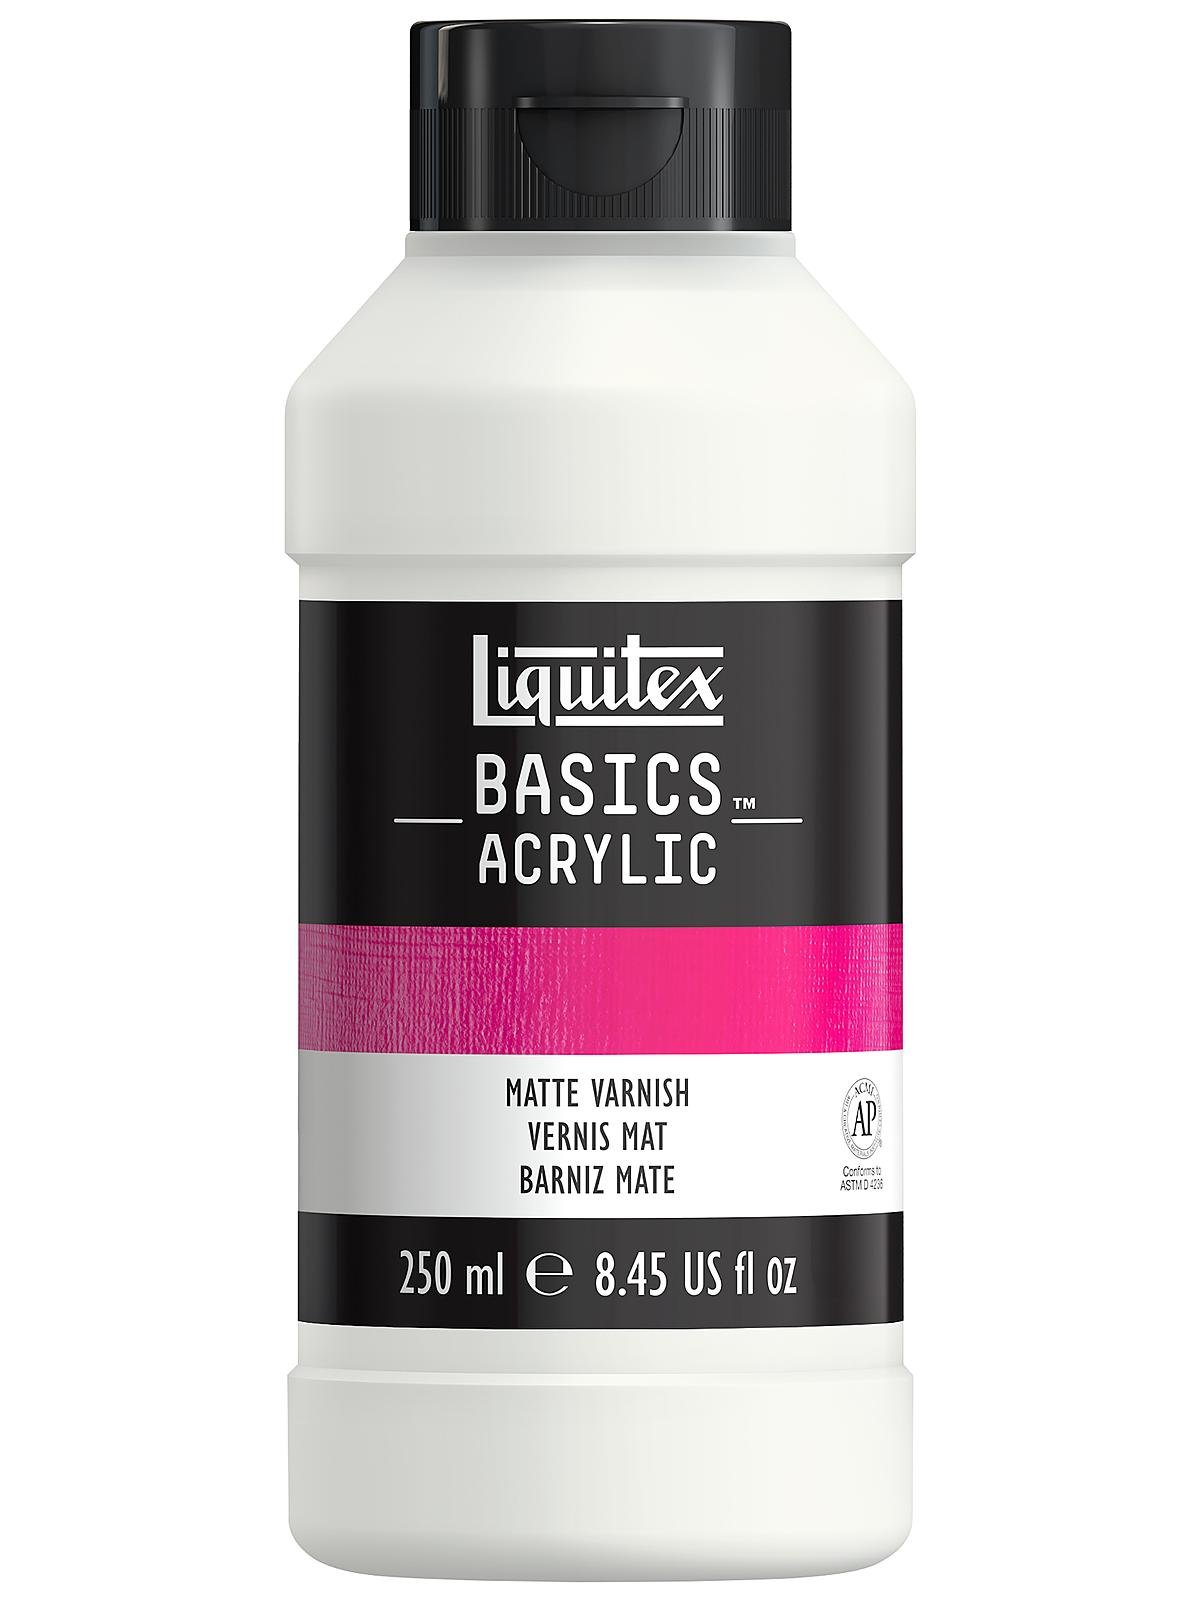  Liquitex BASICS Gesso Surface Prep Medium, 473ml (16-oz)  Bottle, White : Tools & Home Improvement